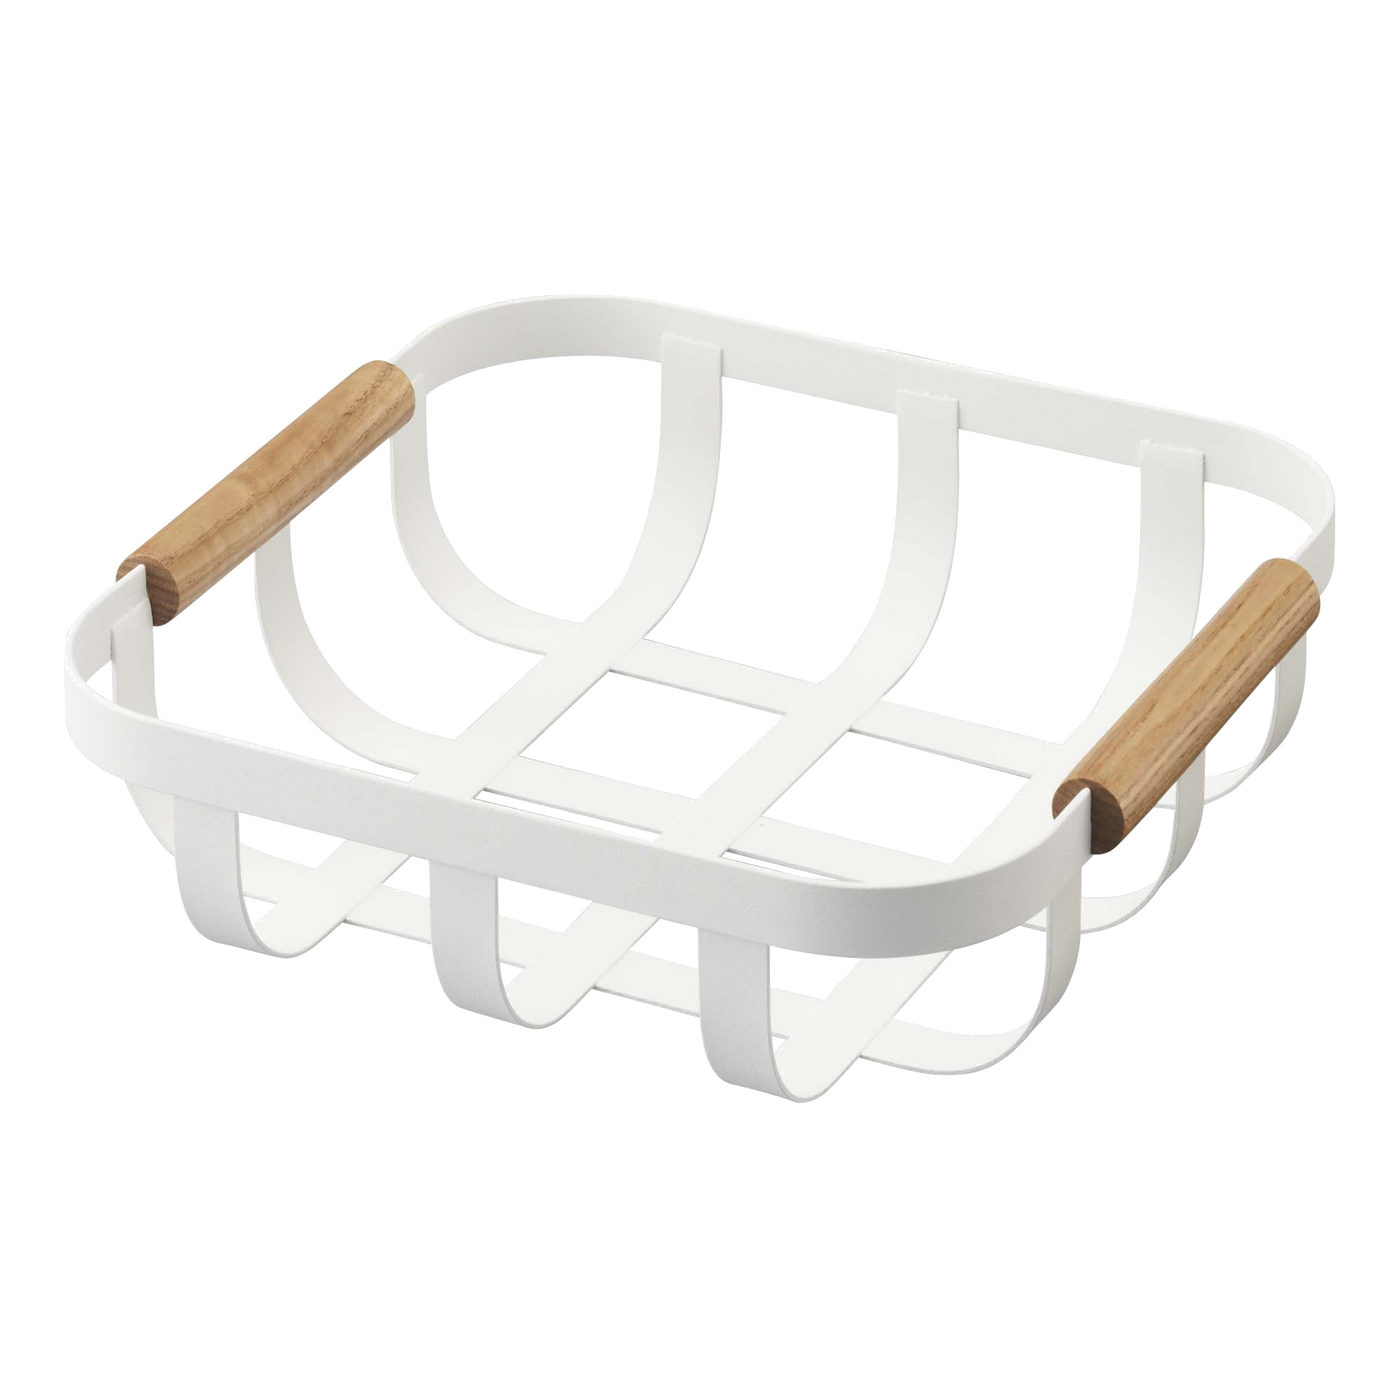 White metal basket with wood handles by Yamazaki